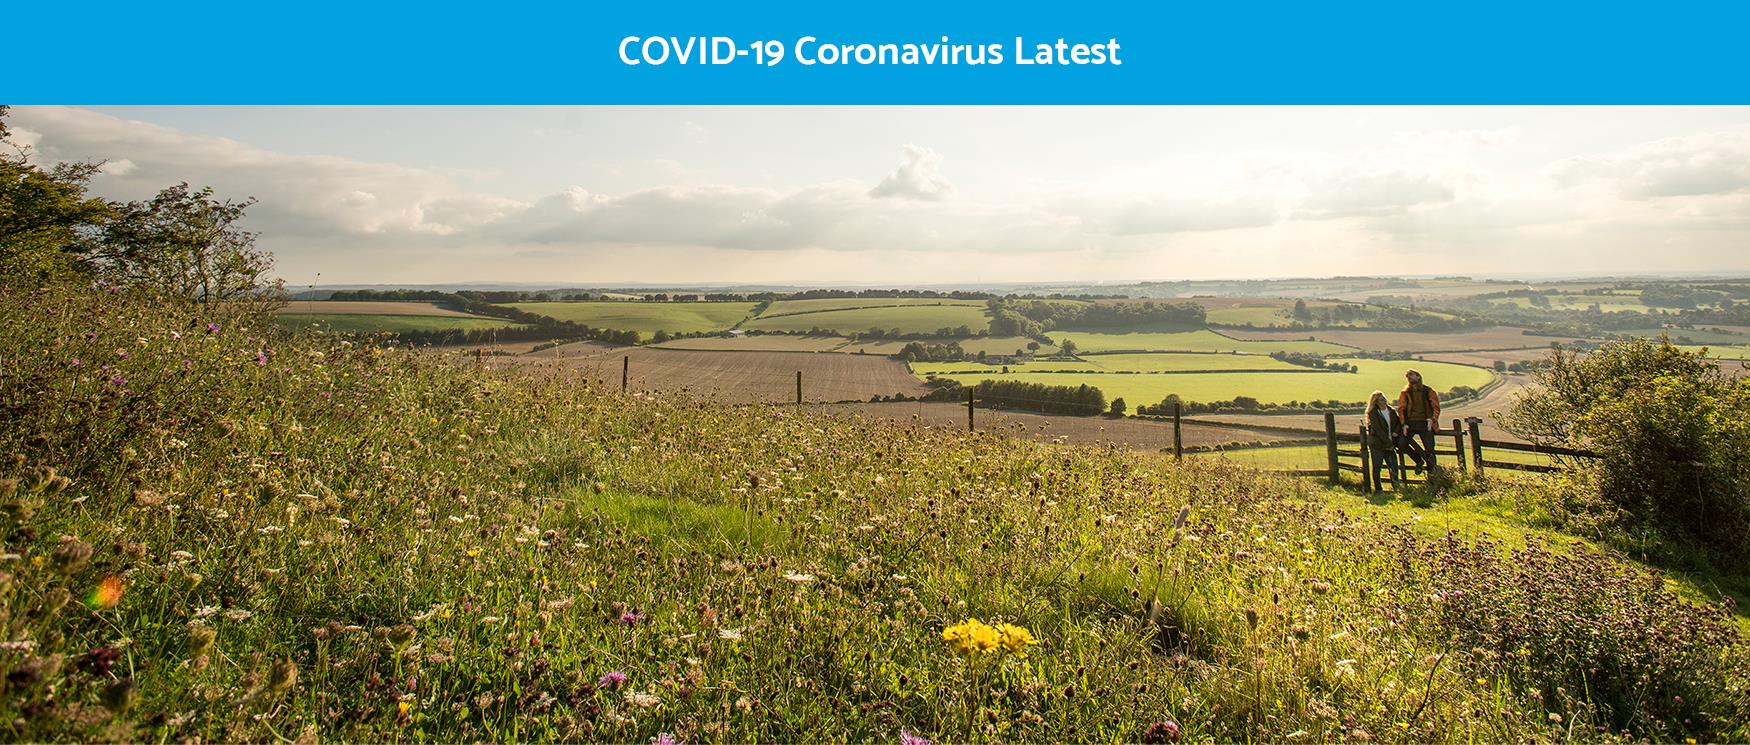 Covid-19 Coronavirus Latest Information